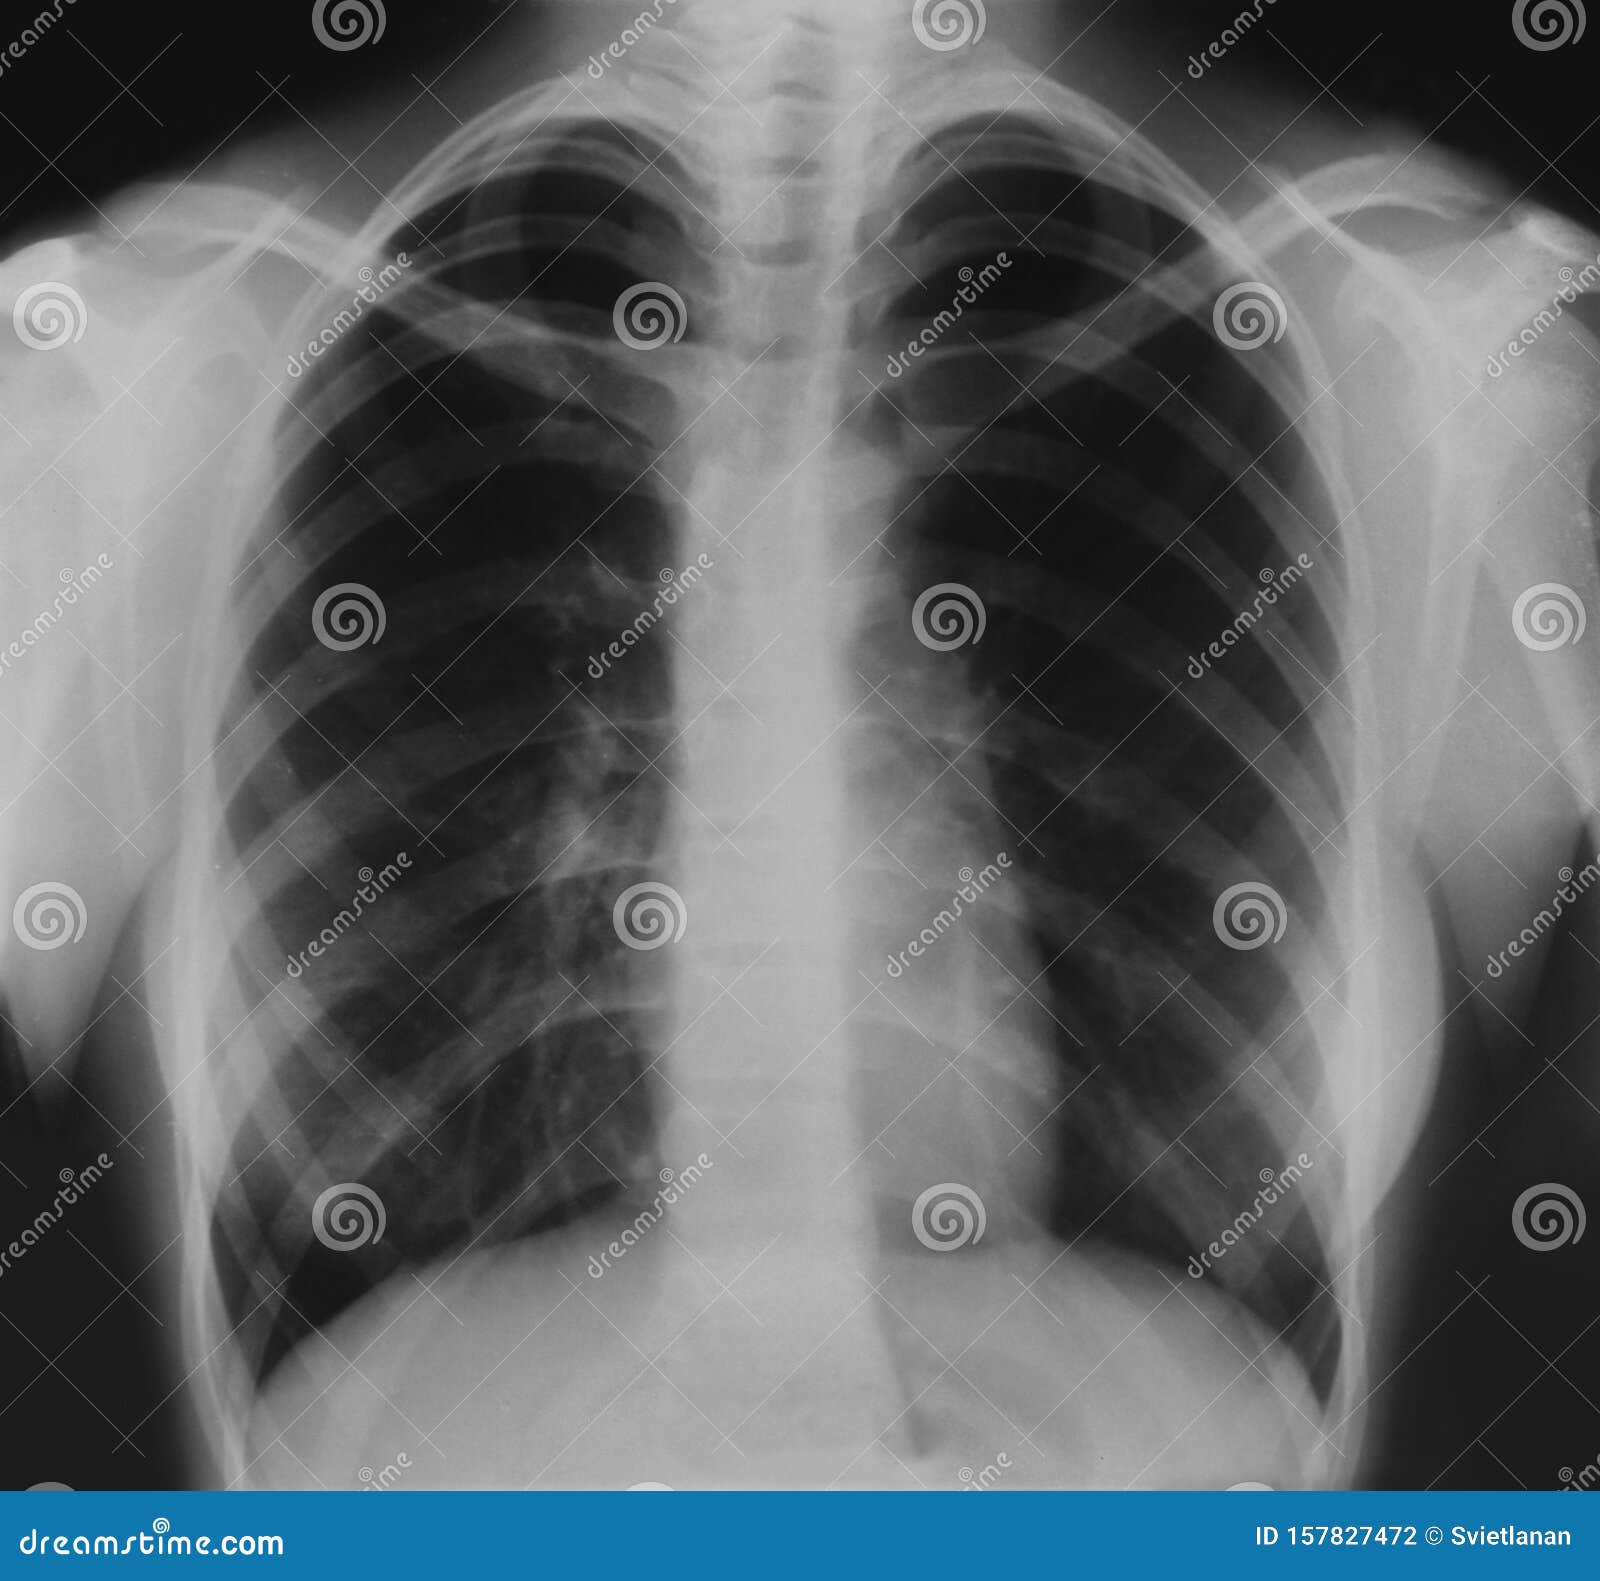 X射线肺炎图像的检测（Detecting Pneumonia in X-Ray Image） - 灰信网（软件开发博客聚合）